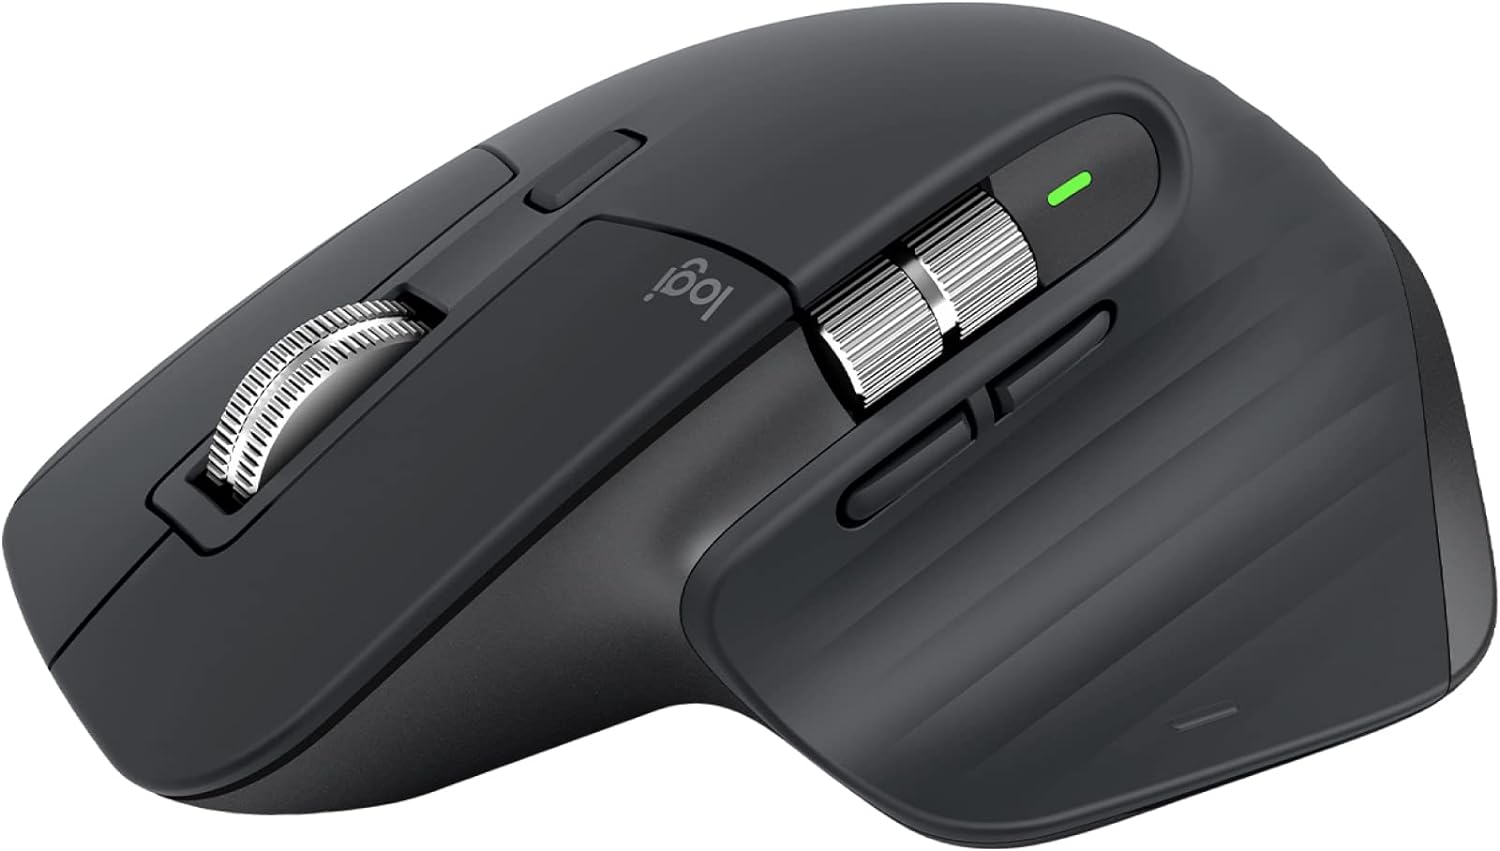 Logitech Mx Master 3S Wireless Mouse, Graphite Black  - MX2300GR